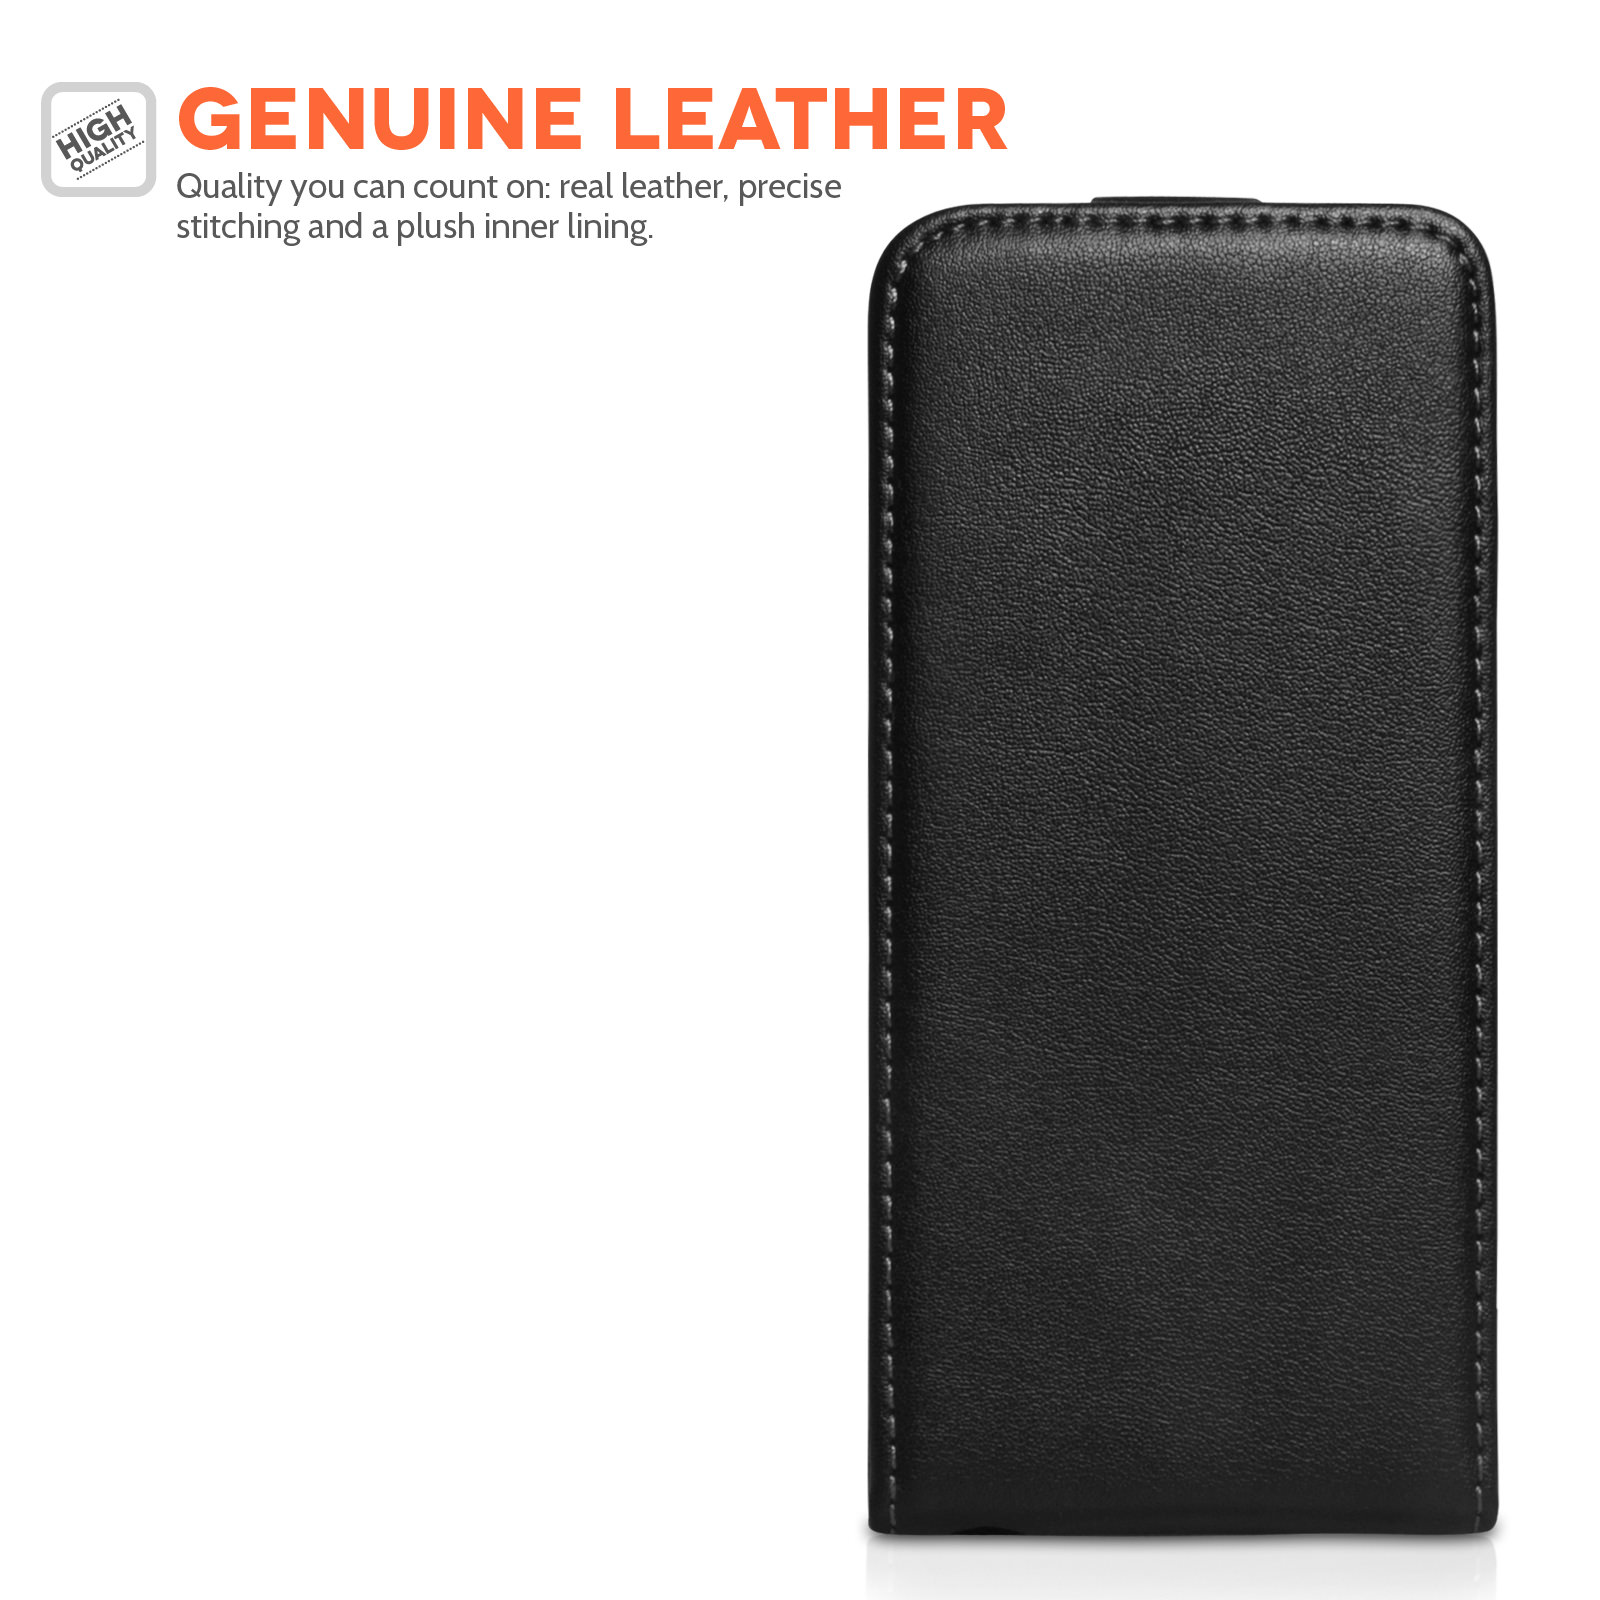 Caseflex iPhone SE Real Leather Flip Case - Black